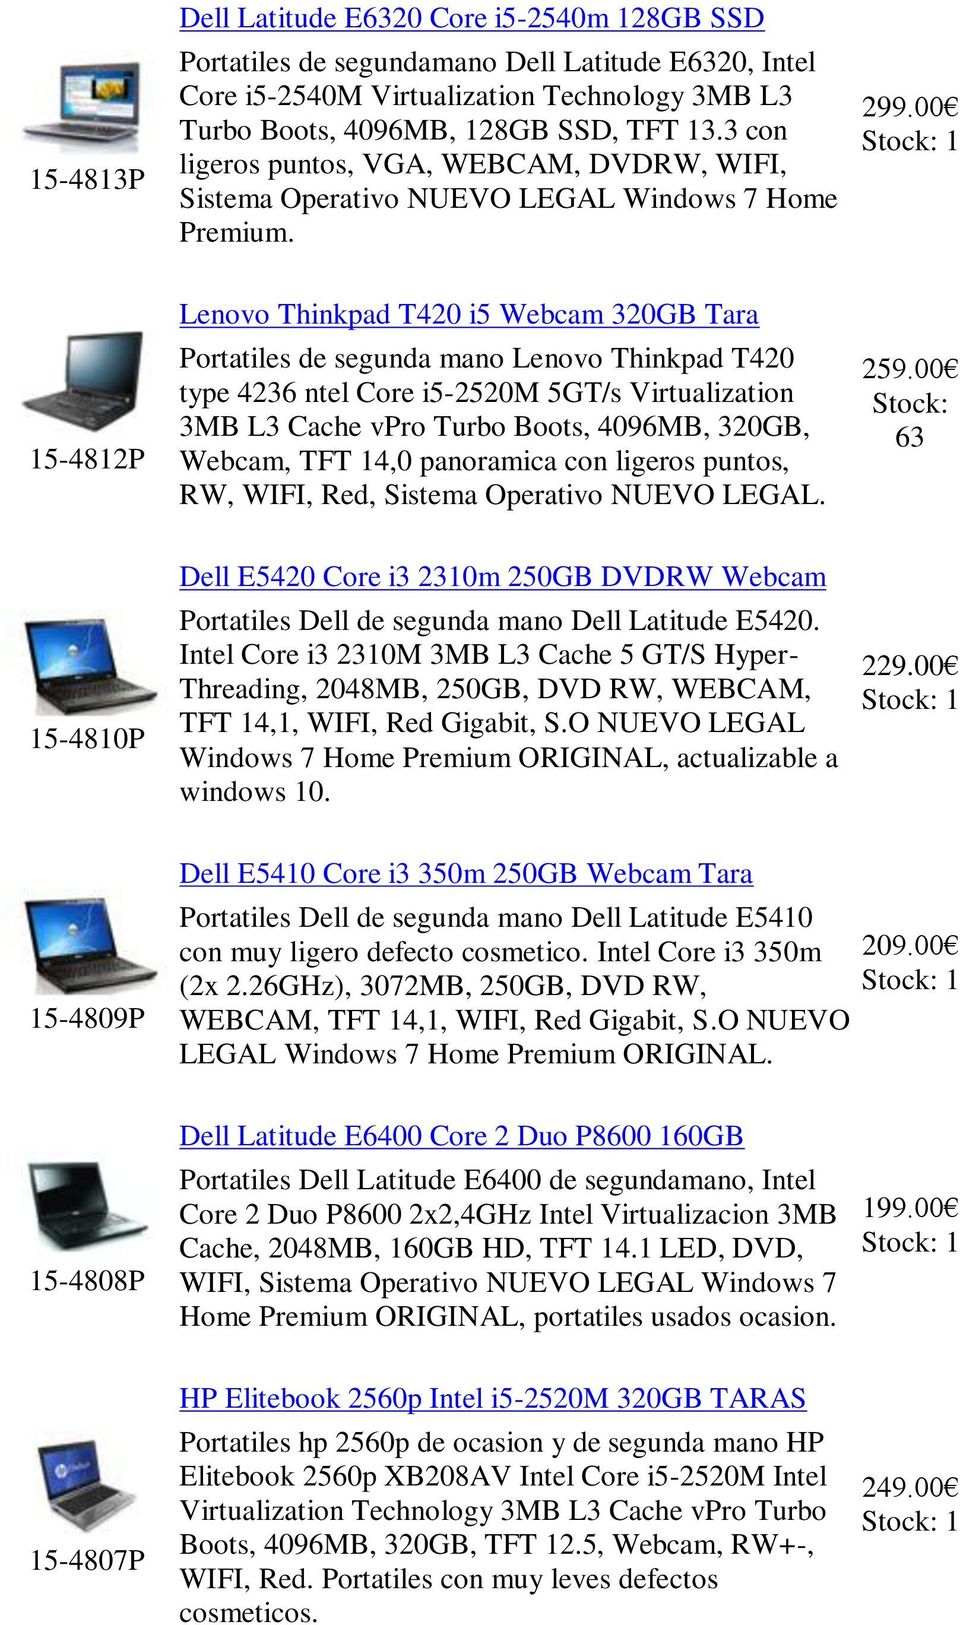 00 15-4812P Lenovo Thinkpad T420 i5 Webcam 320GB Tara Portatiles de segunda mano Lenovo Thinkpad T420 type 4236 ntel Core i5-2520m 5GT/s Virtualization 3MB L3 Cache vpro Turbo Boots, 4096MB, 320GB,